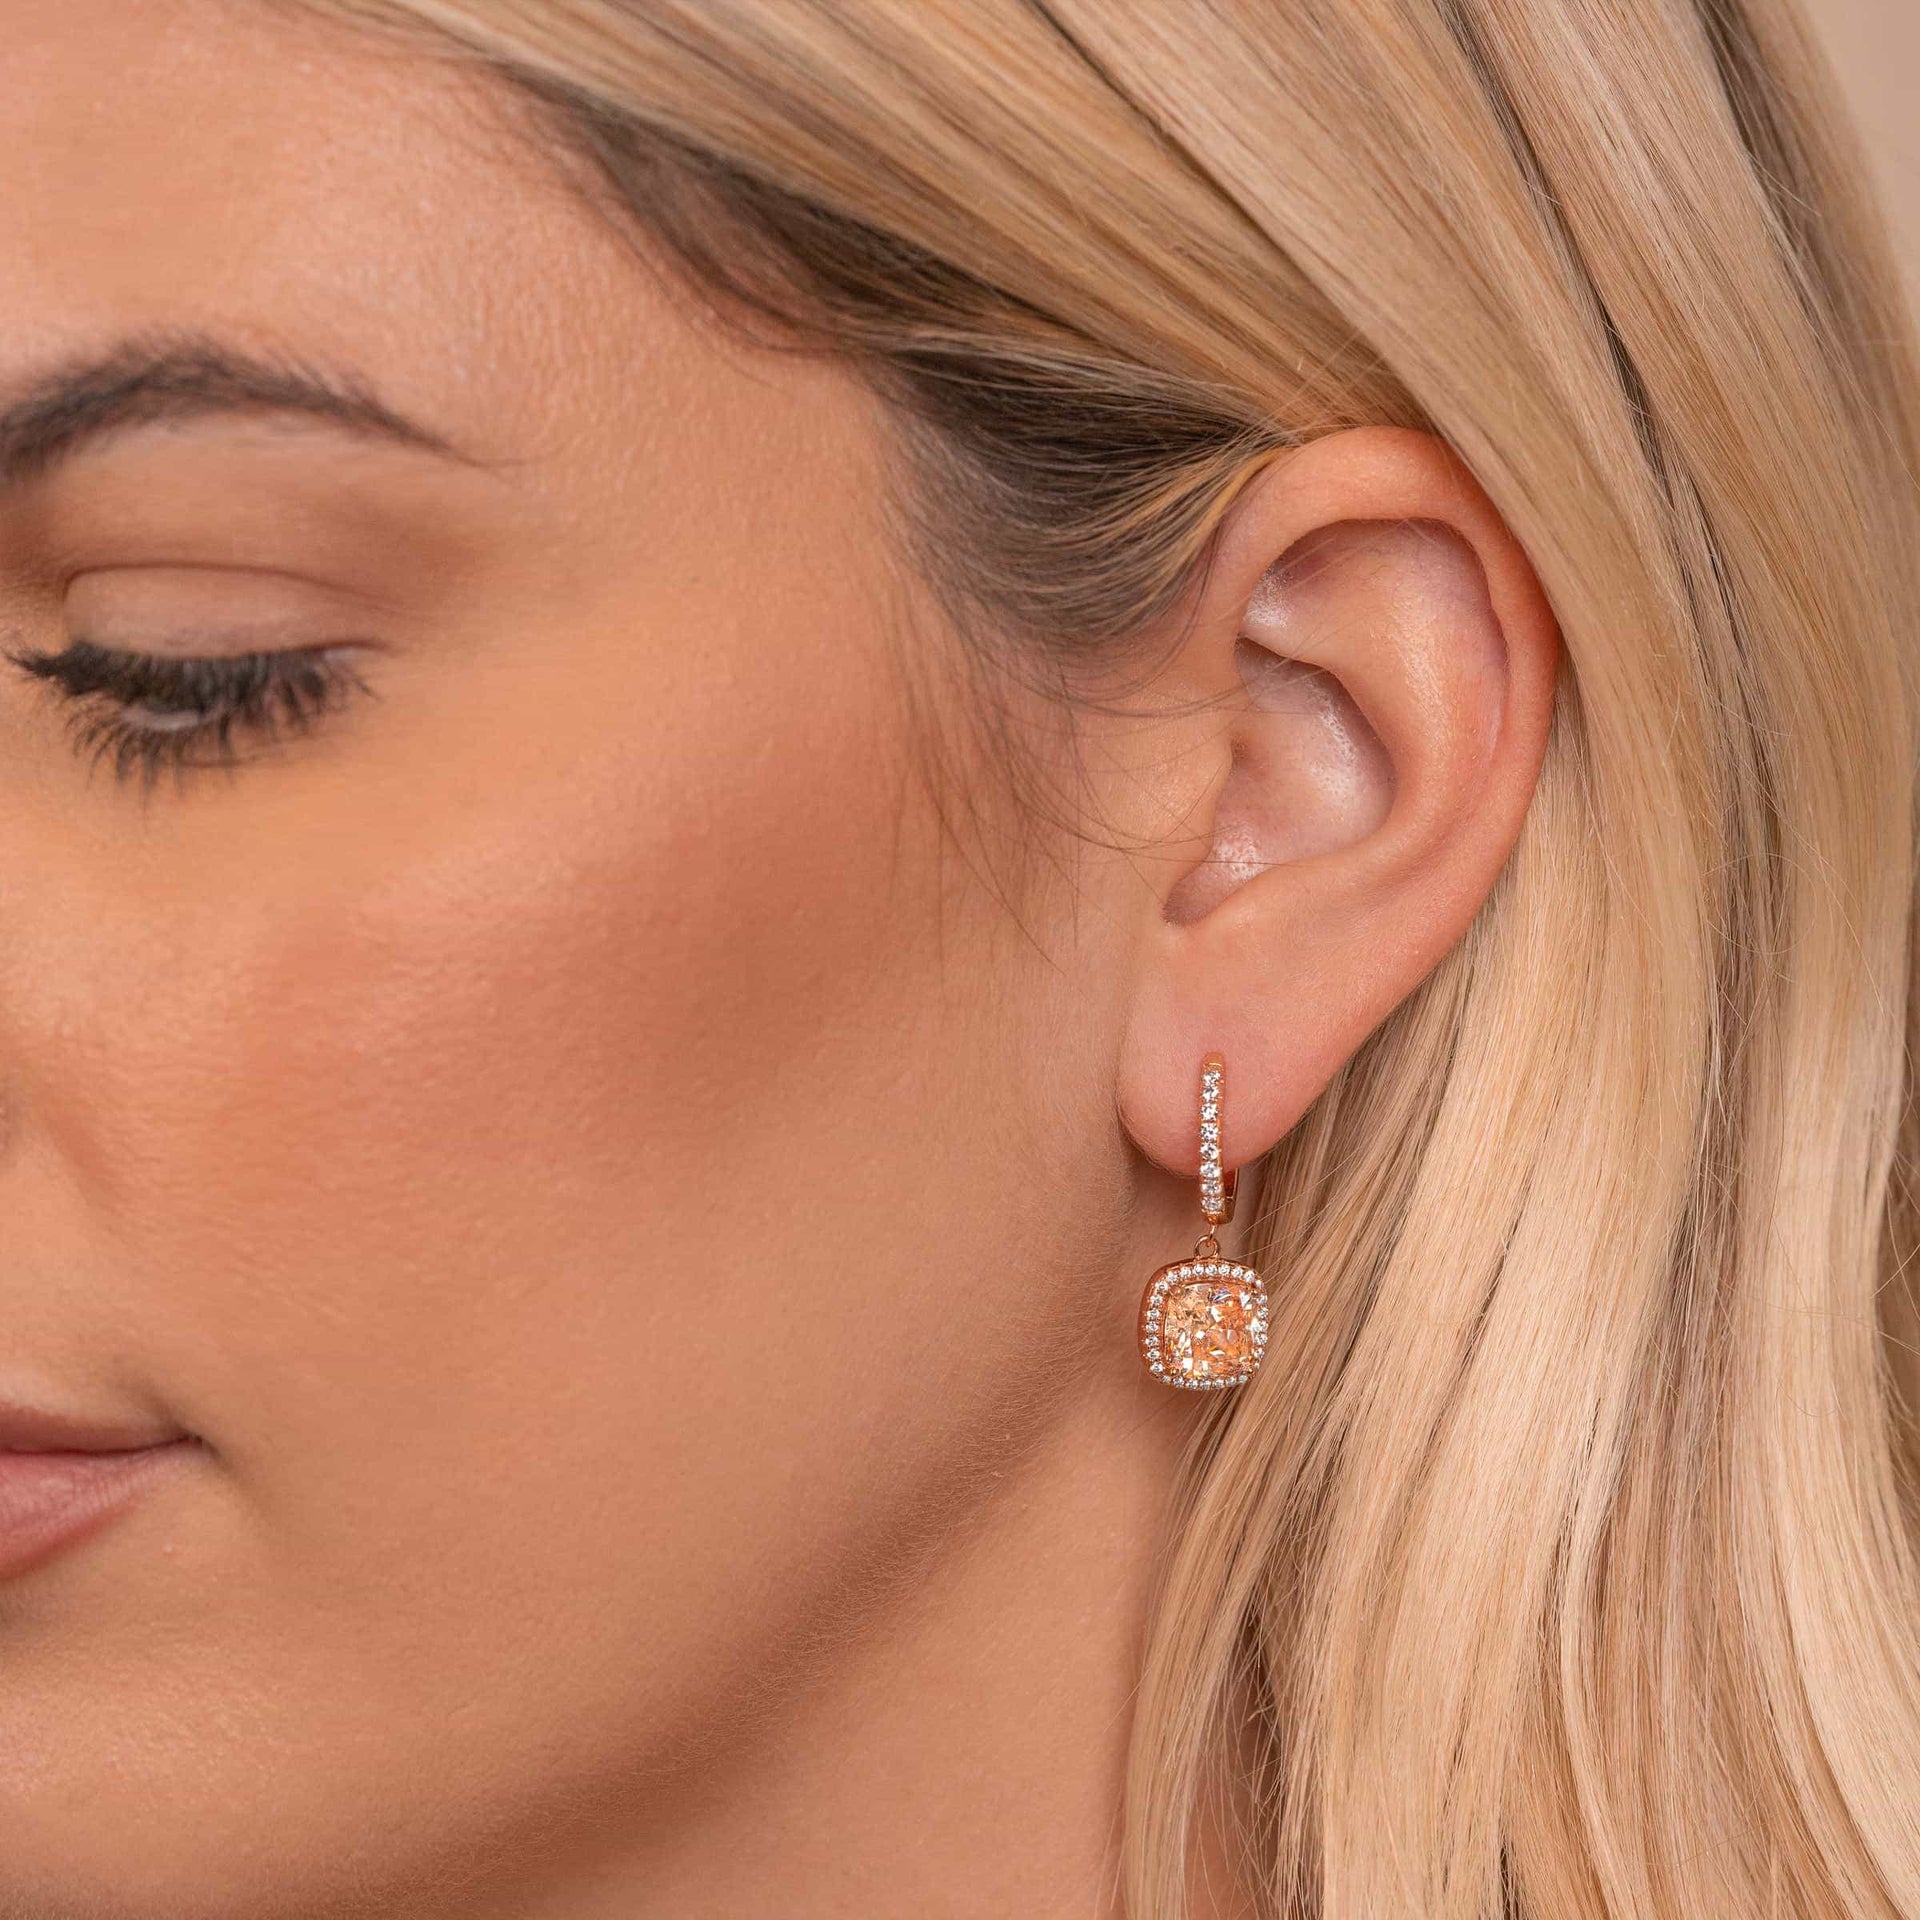 Girl wearing rose gold earrings